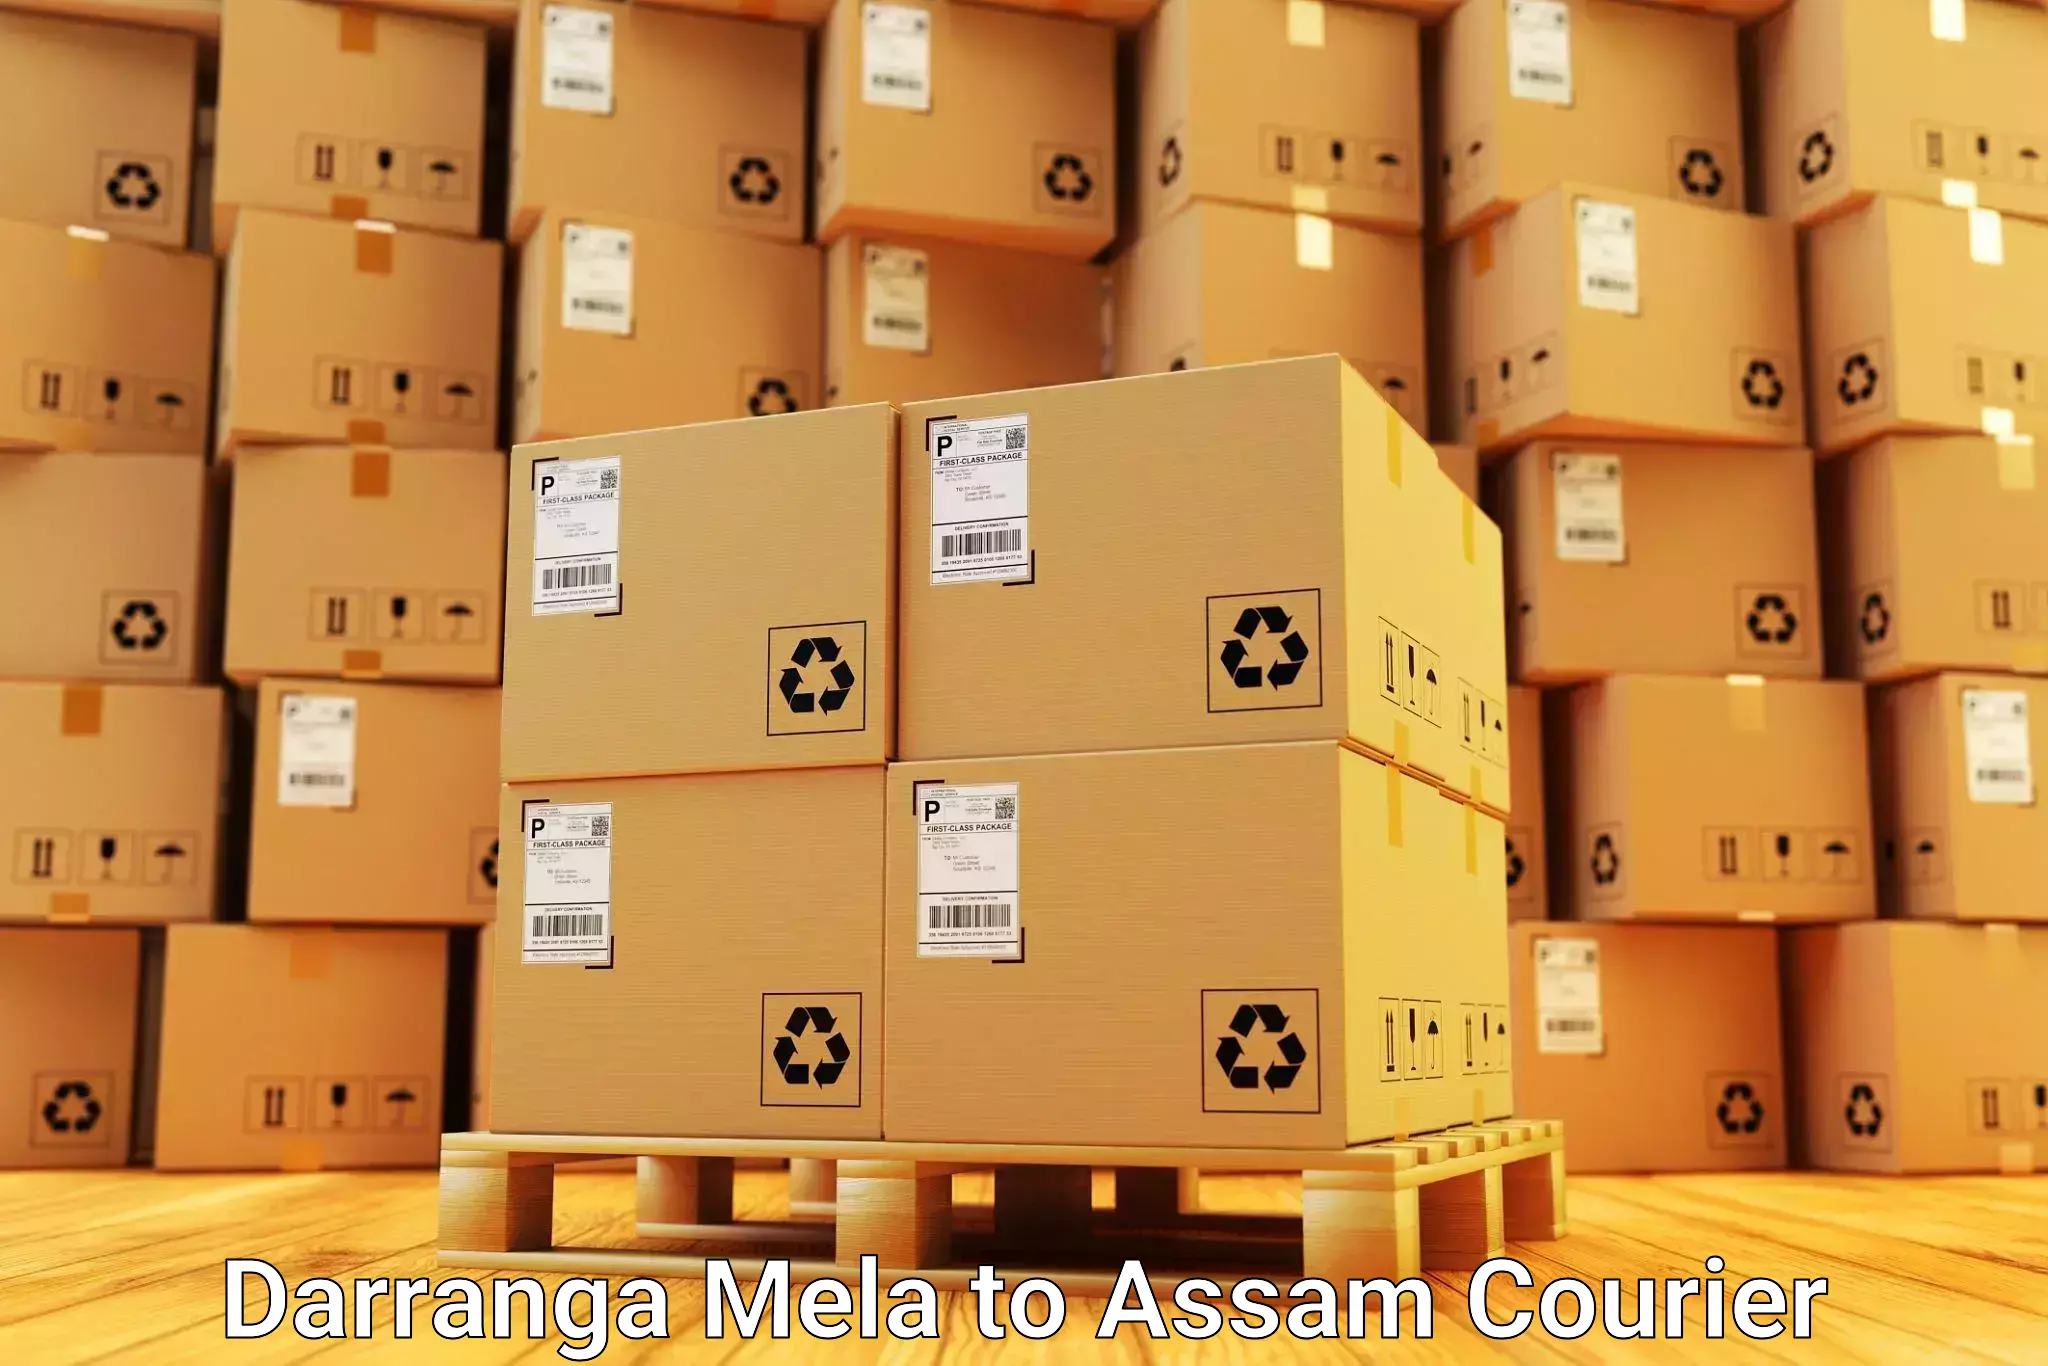 Specialized moving company in Darranga Mela to Assam